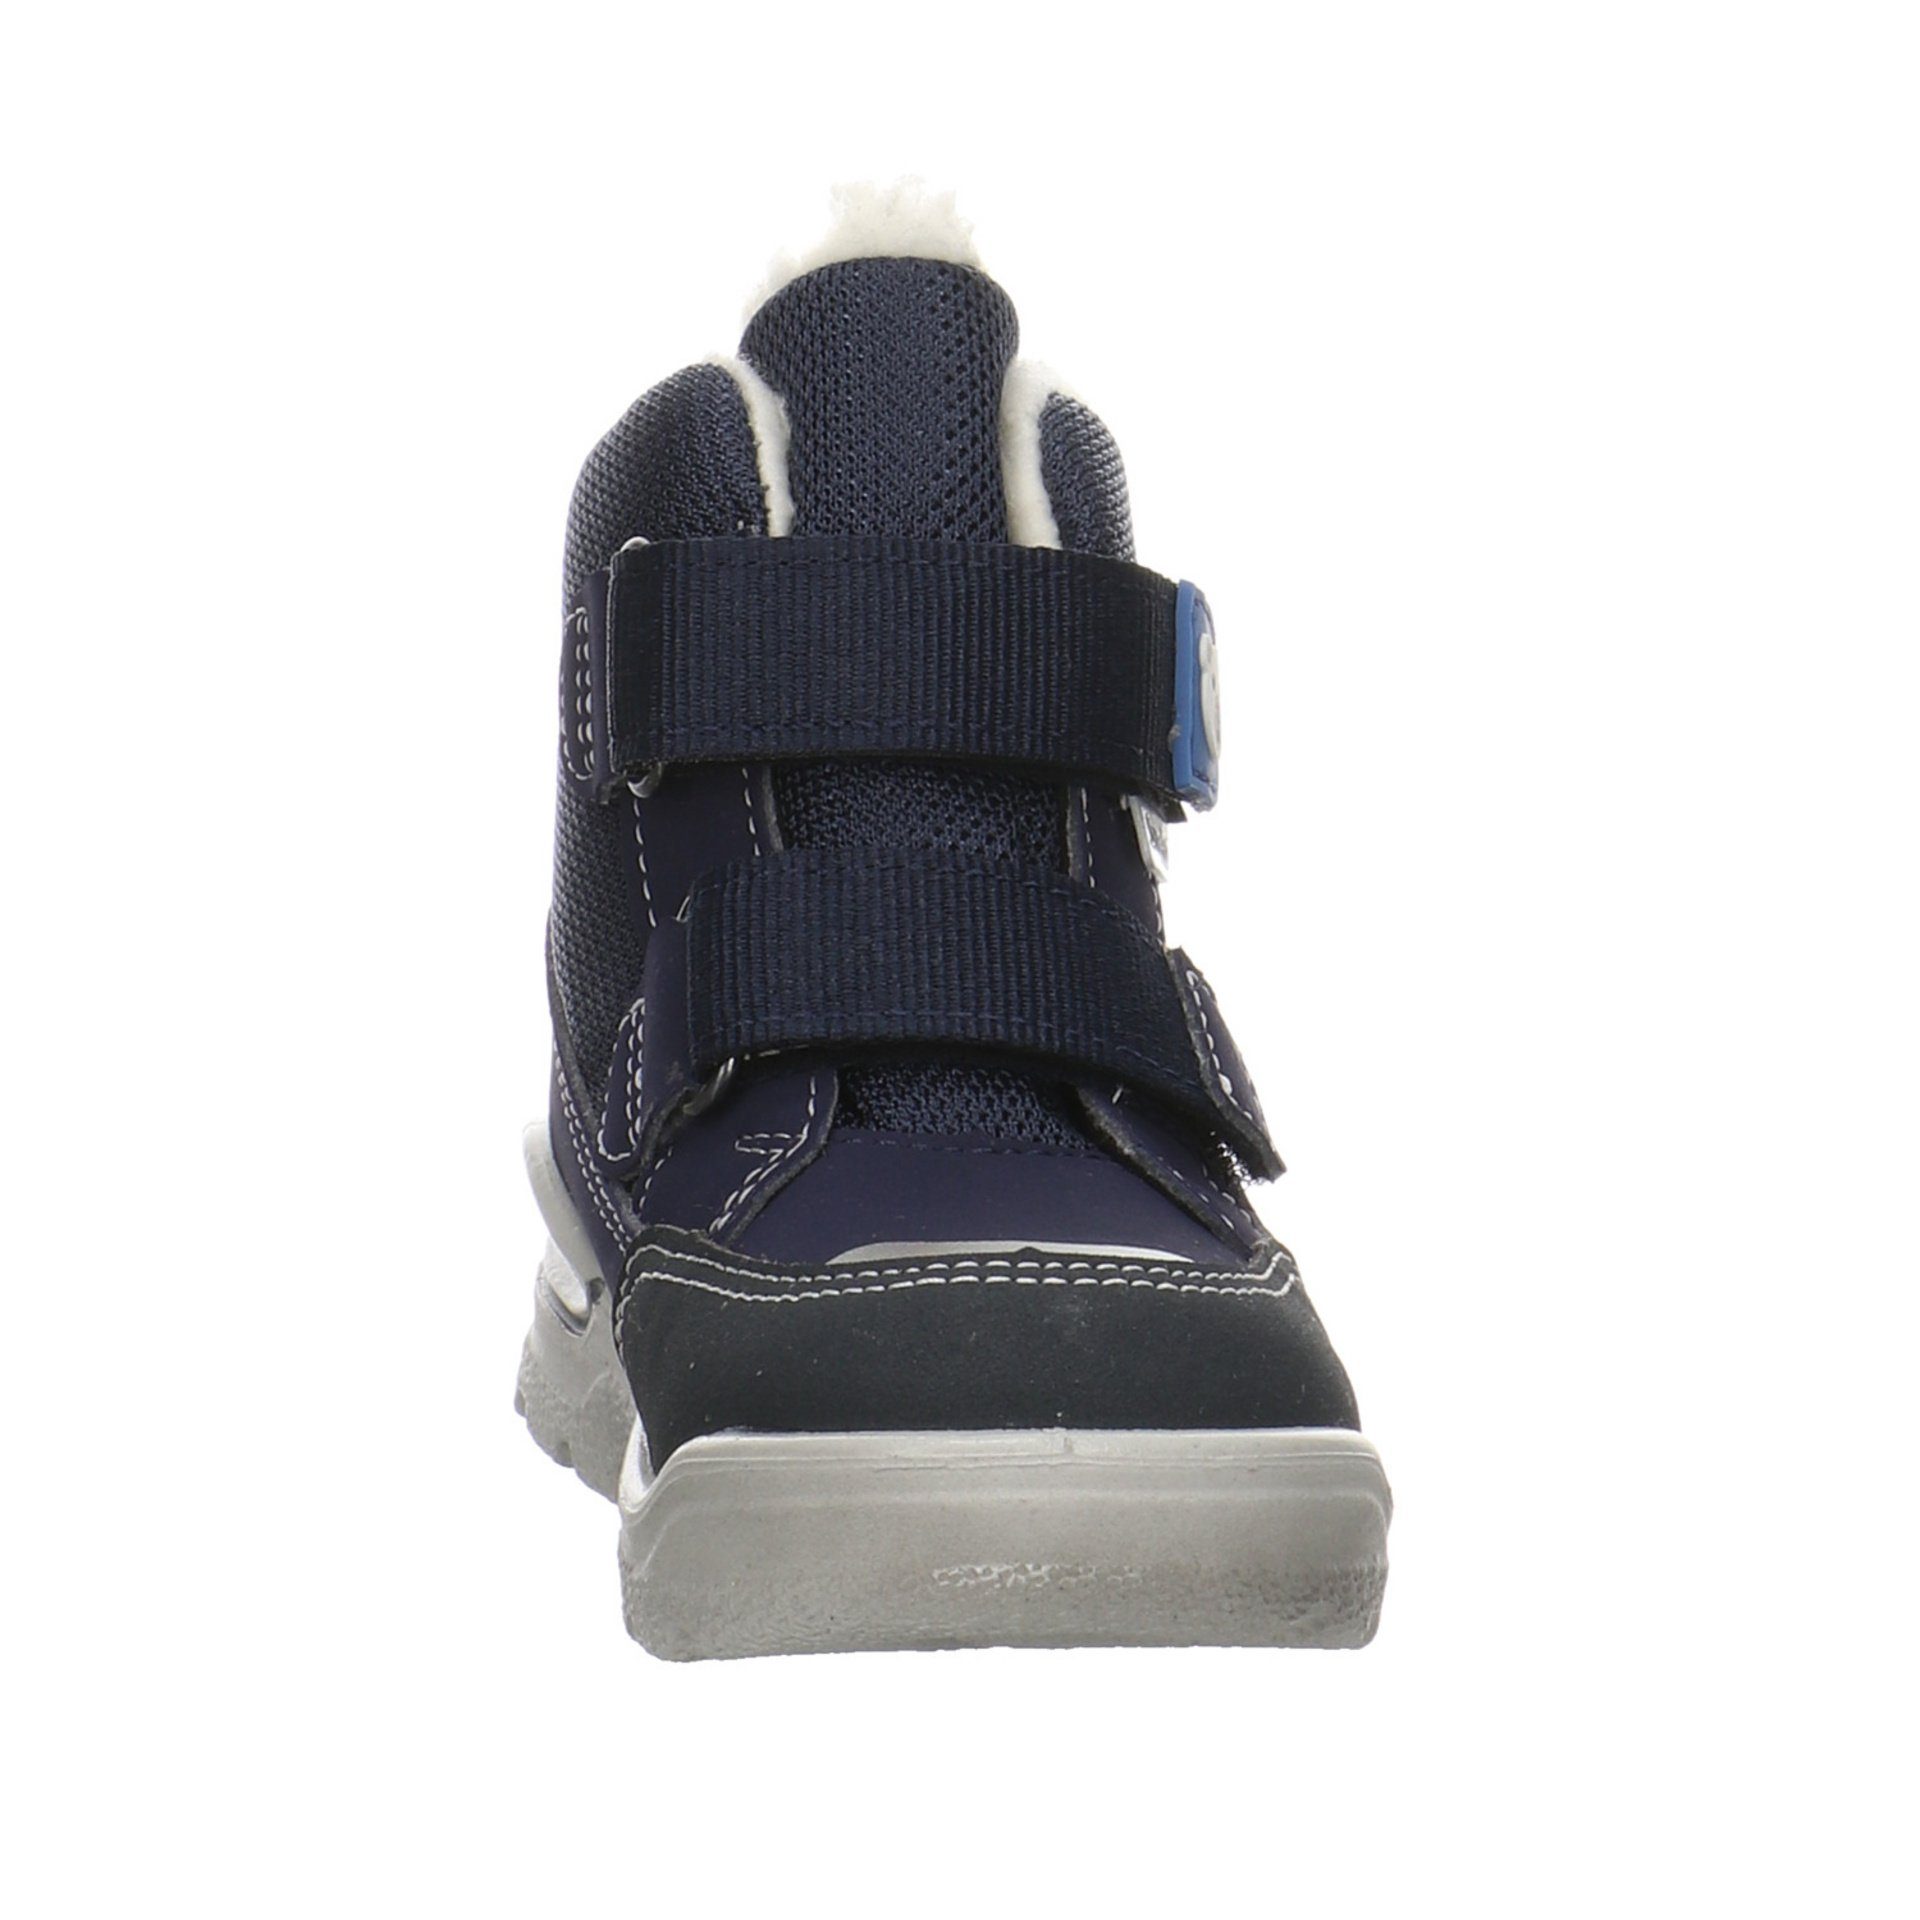 (170) Ricosta Boots Sneaker Kinderschuhe Synthetikkombination Schuhe Jungen Benno nautic/ozean Sneaker